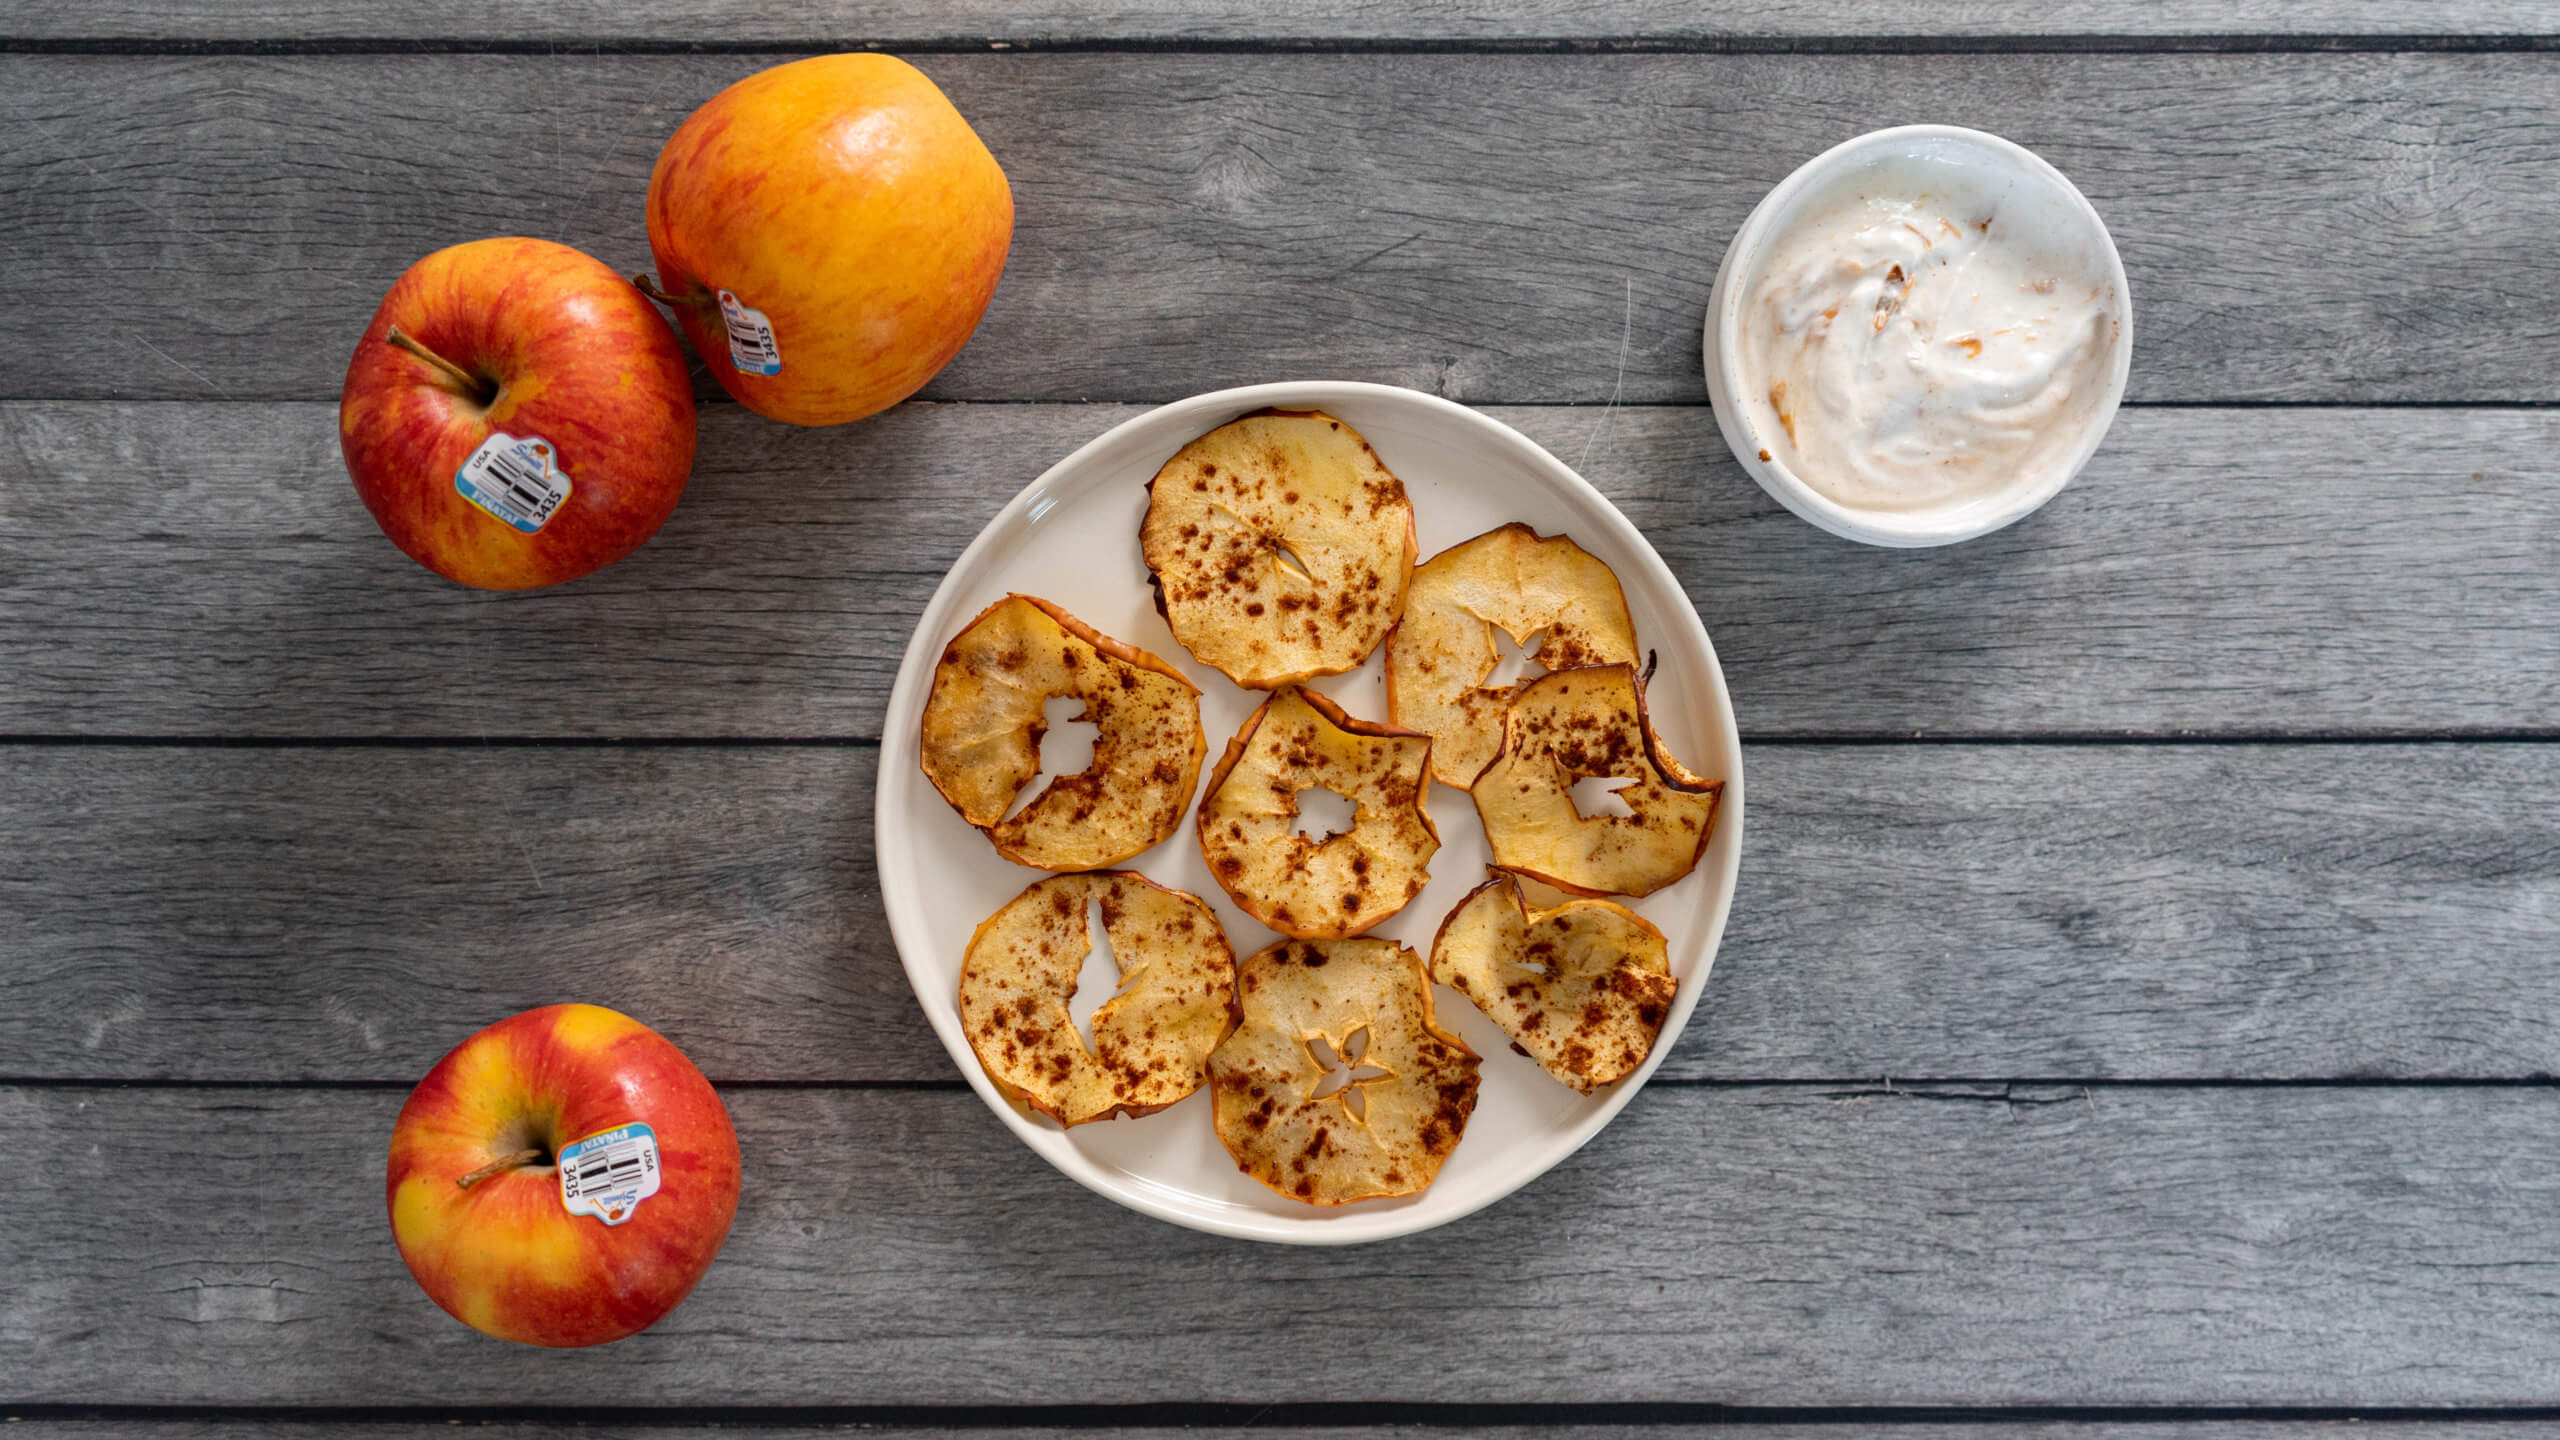 Cinnamon apple air-fried chips with yogurt dipping sauce.